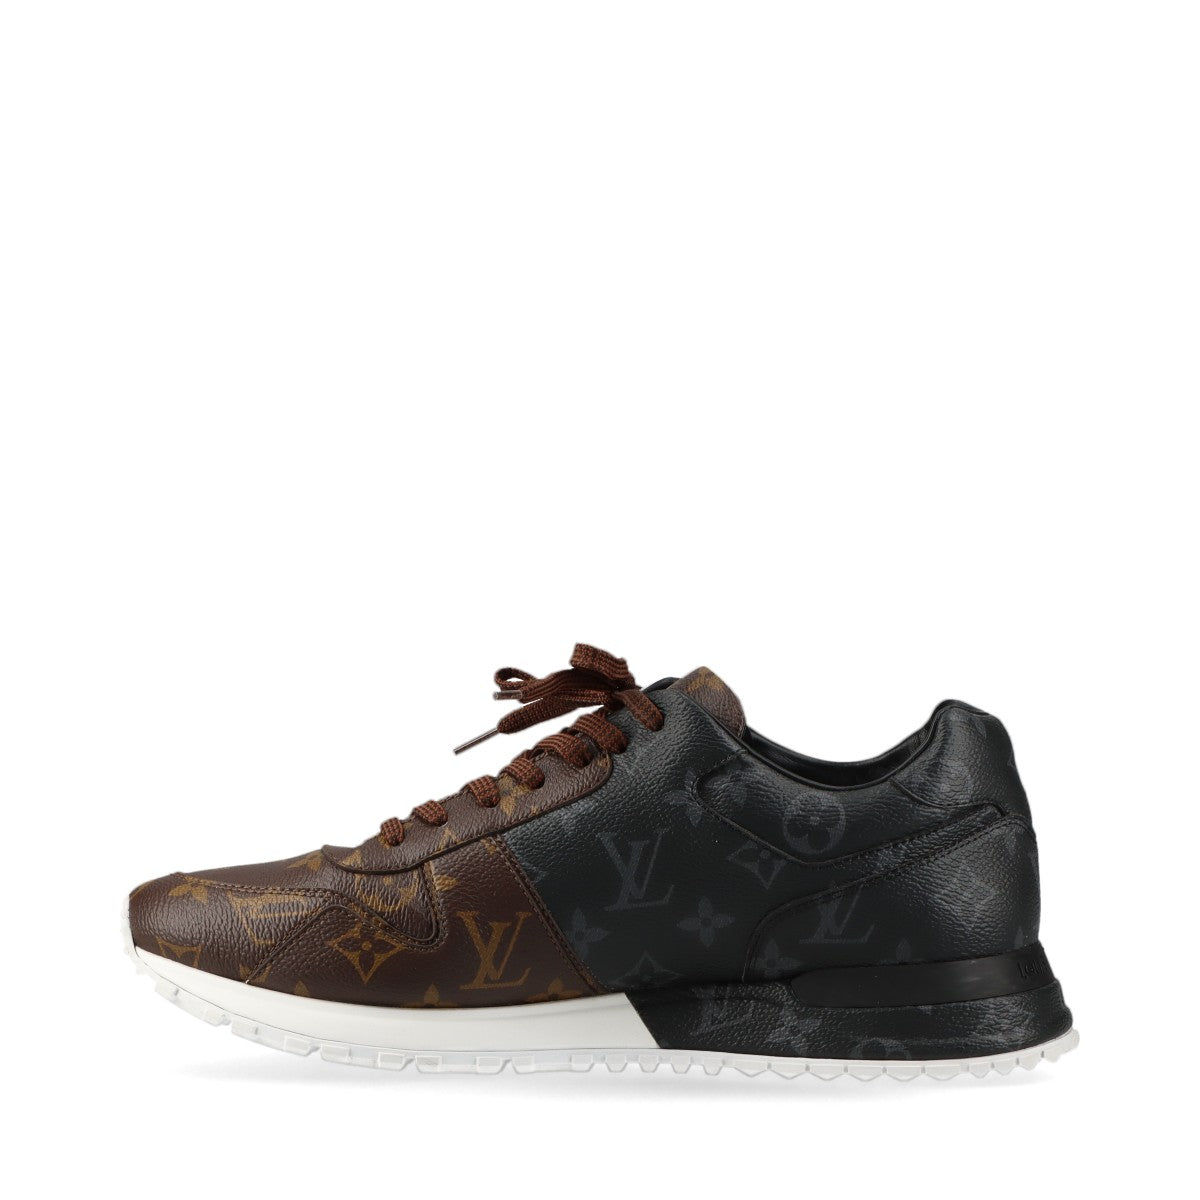 Louis Vuitton Runaway line 21 years Leather Sneakers 7.5 Men's Black x white x brown LD0231 Monogram